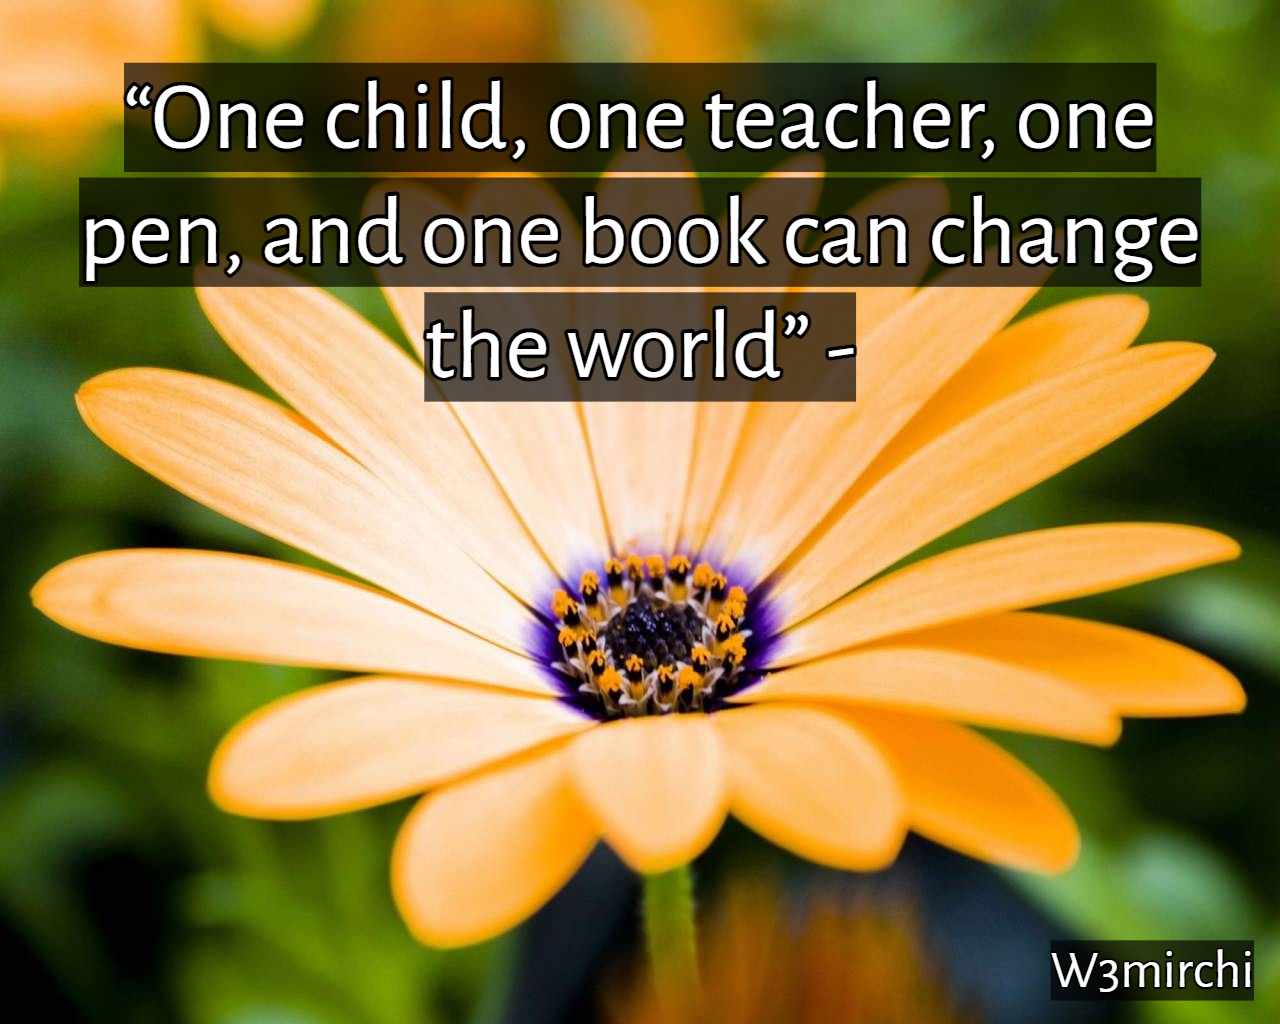 “One child, one teacher, one pen,